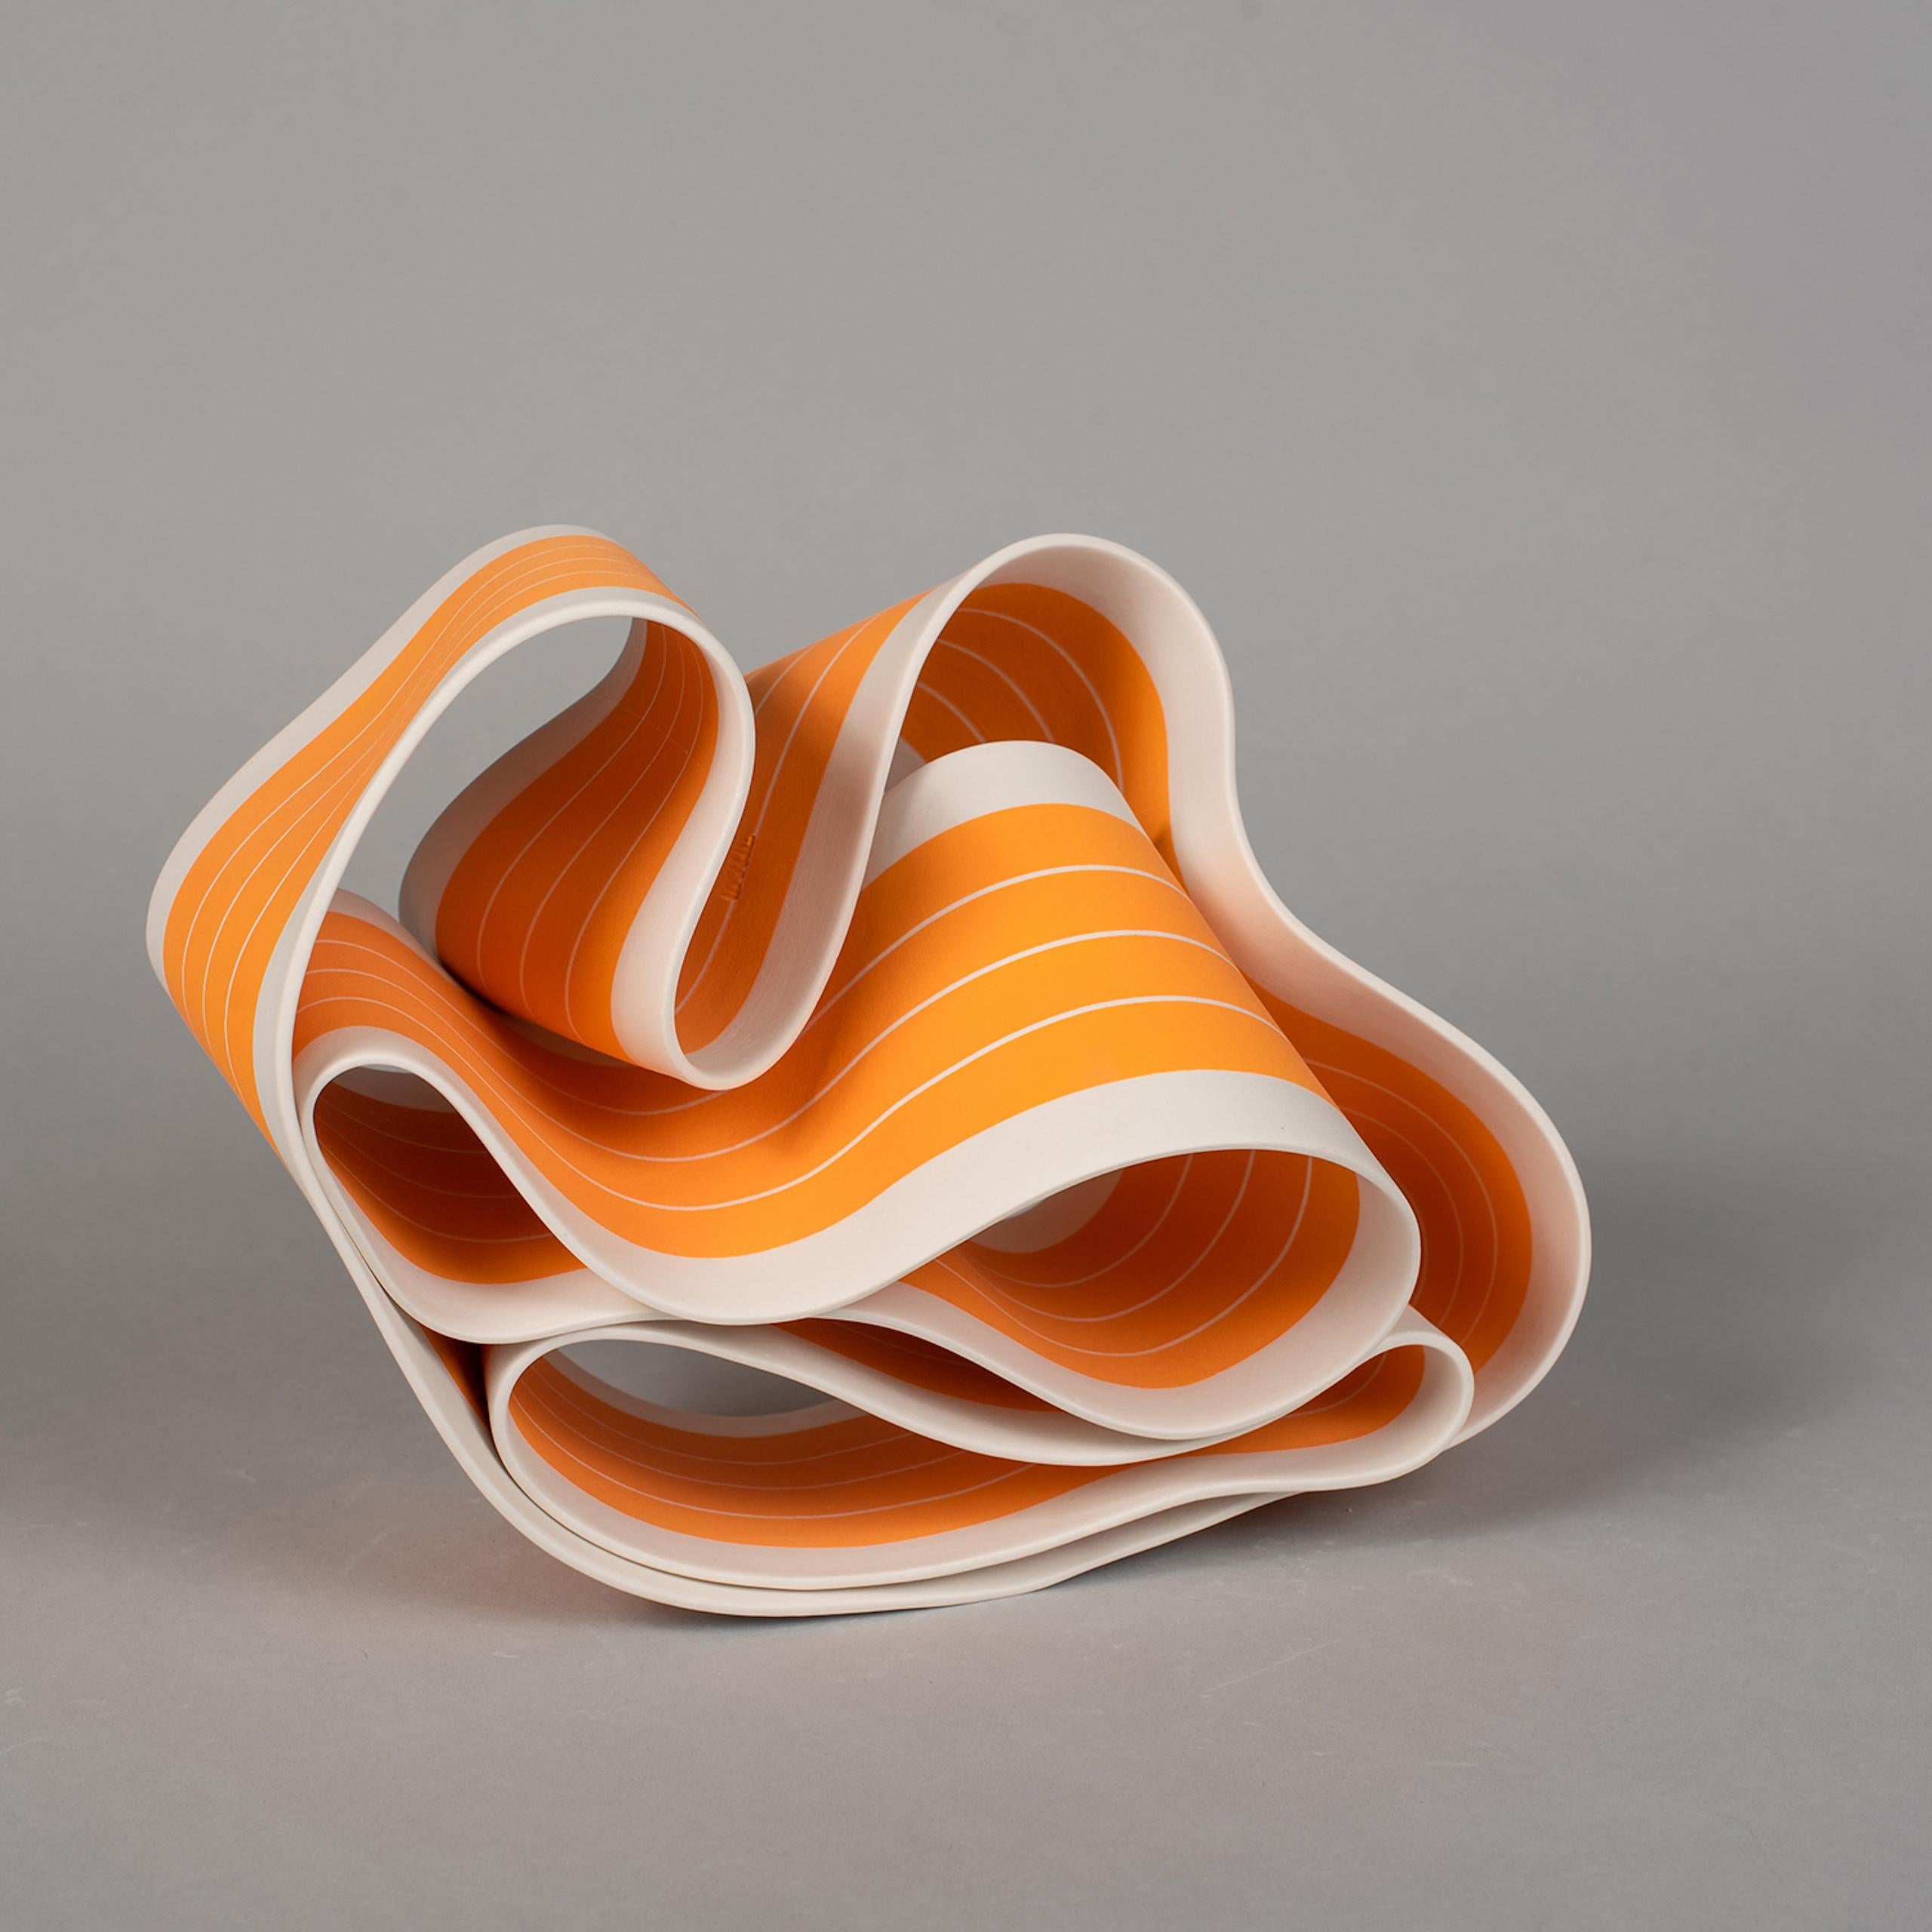 Folding in Motion 5 by Simcha Even-Chen - Porcelain sculpture, orange, line For Sale 1